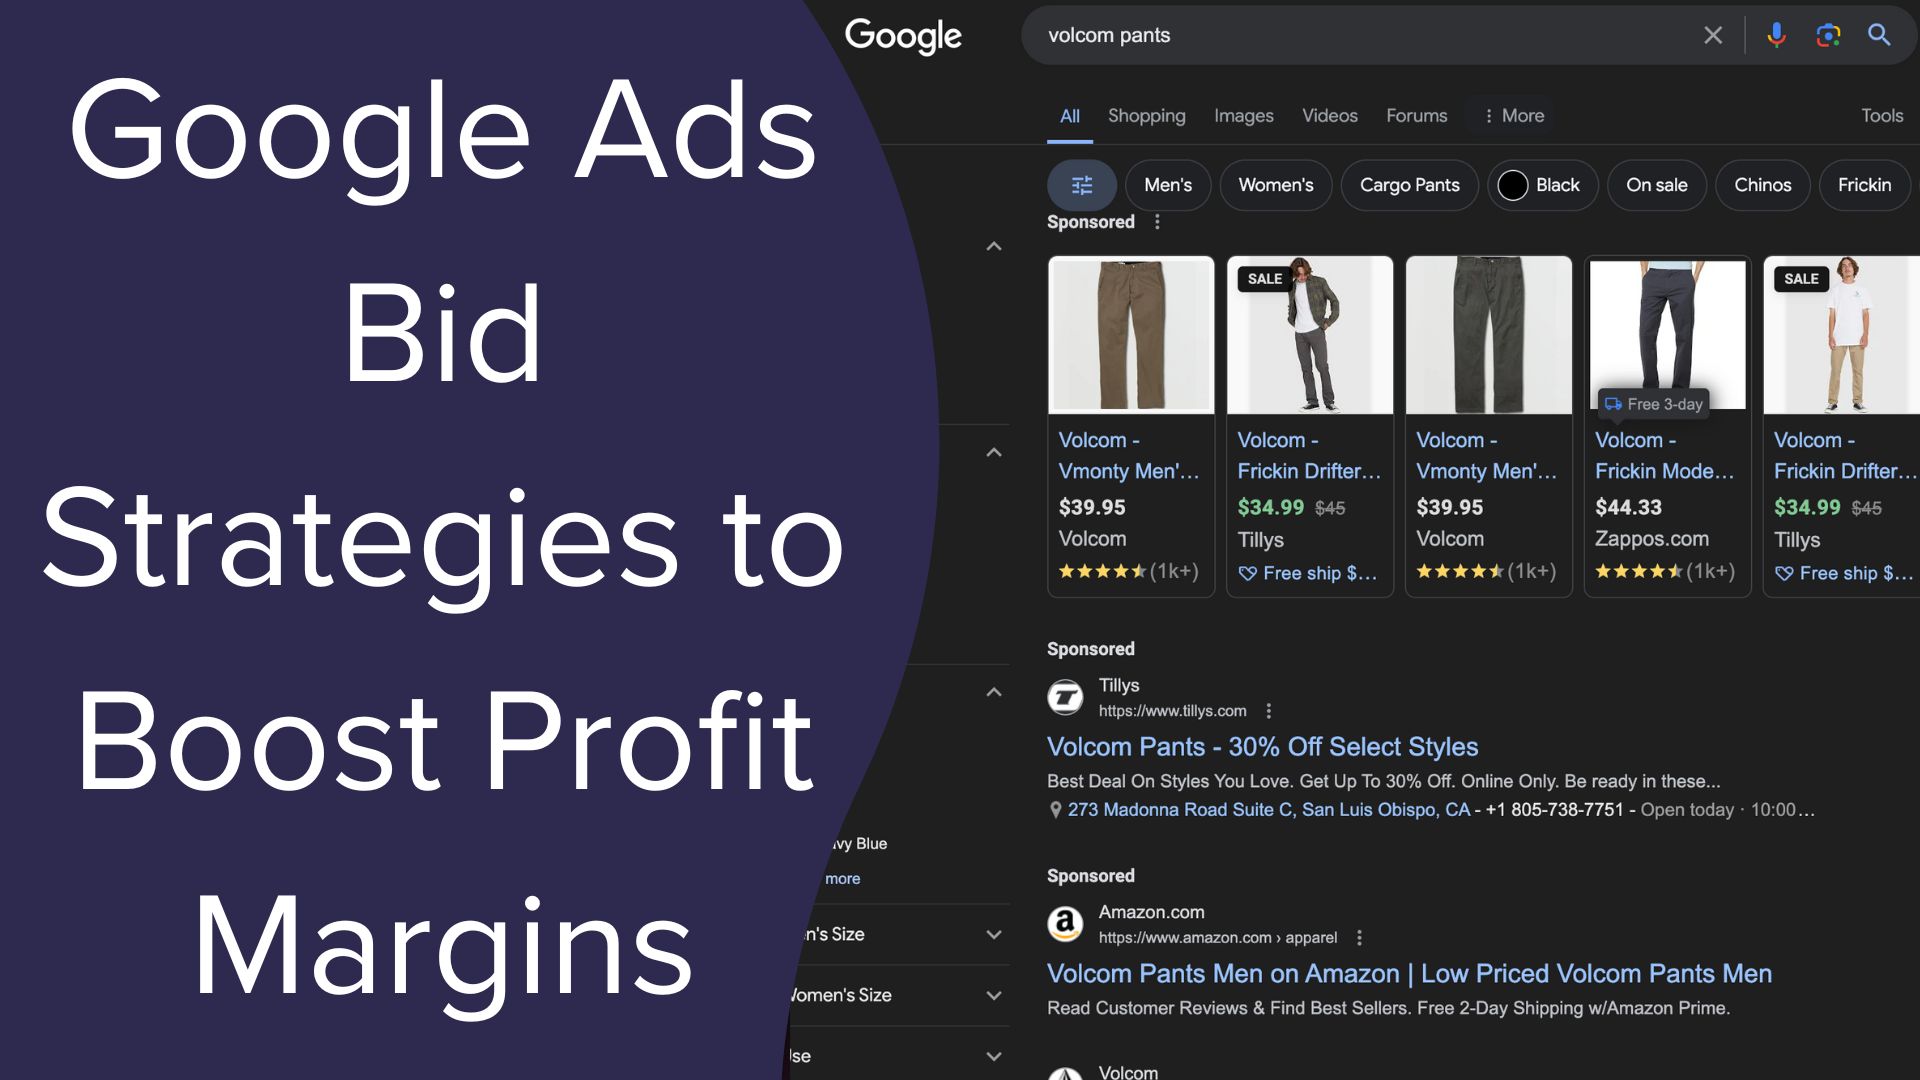 Google Ads Bid Strategies to Boost Profit Margins